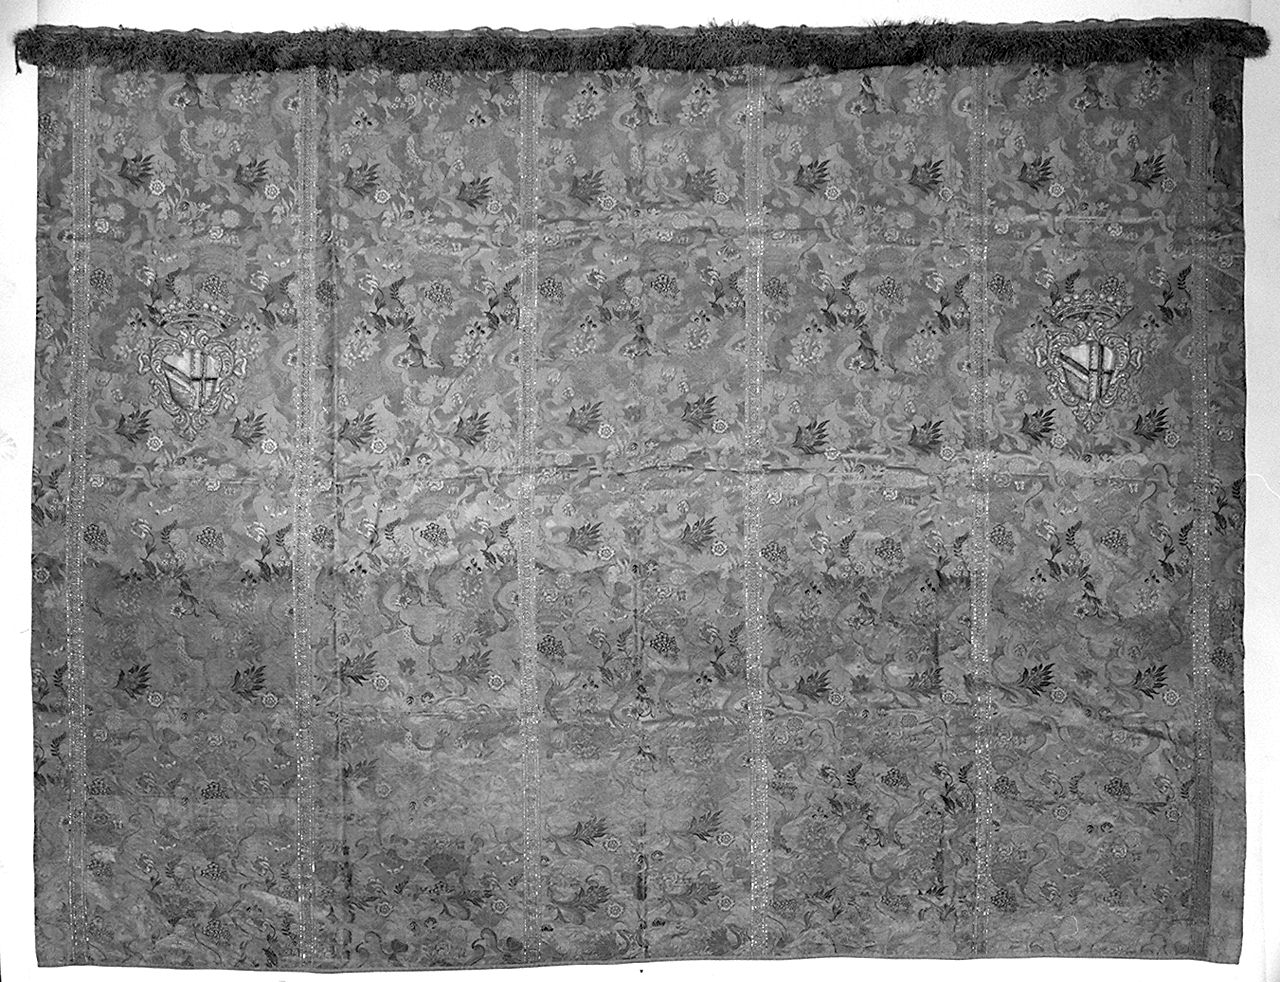 cortina - manifattura italiana, manifattura fiorentina (sec. XVIII)